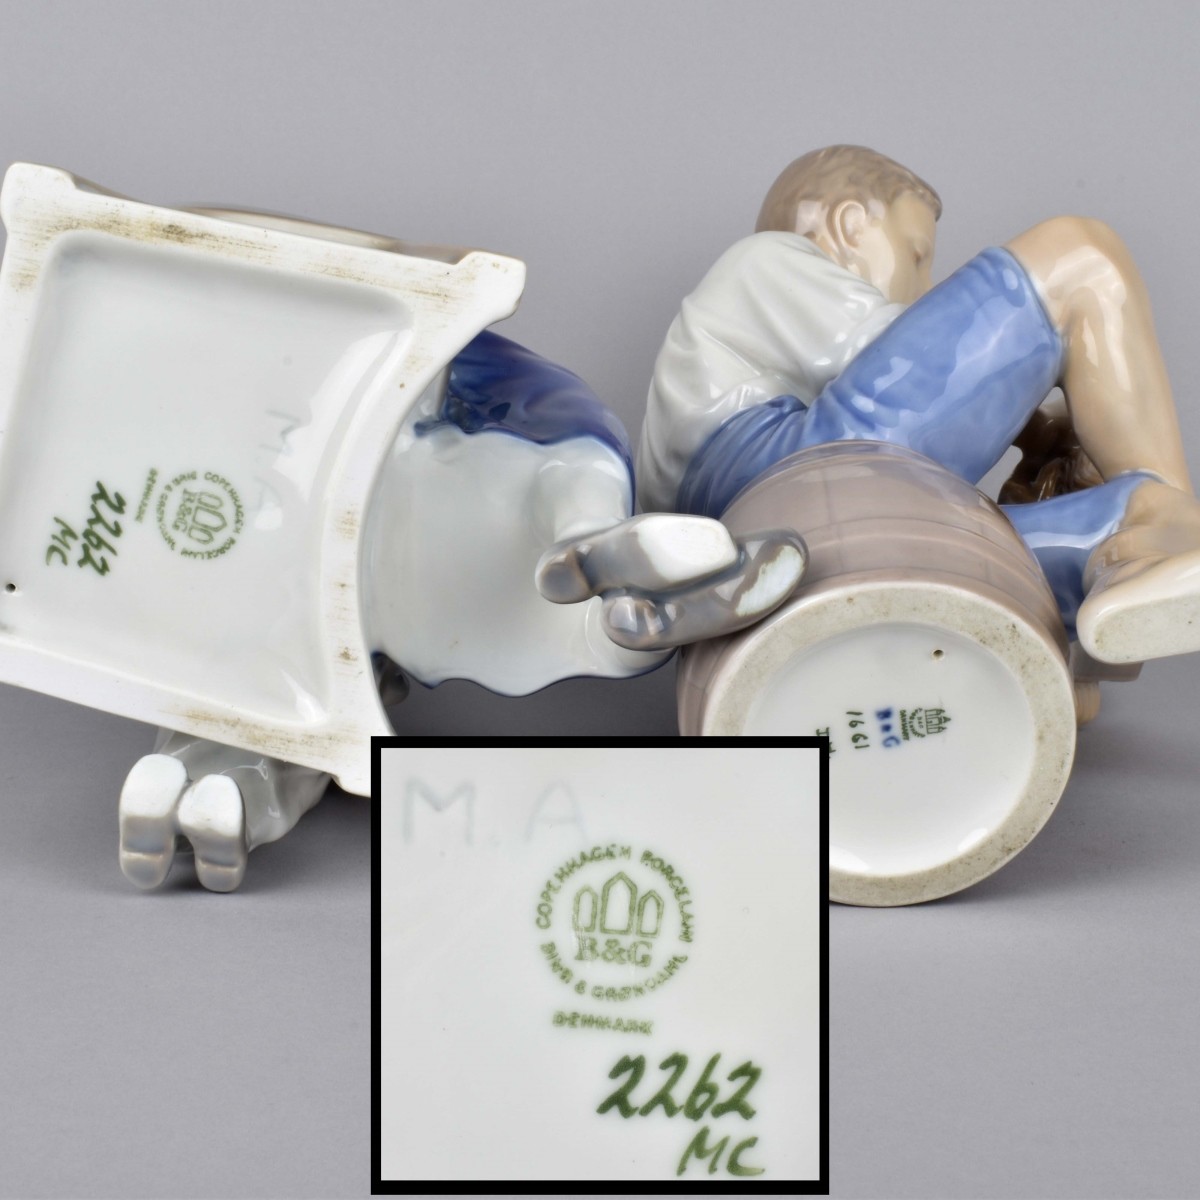 Two Bing & Grondahl (B&G) Porcelain Figurines